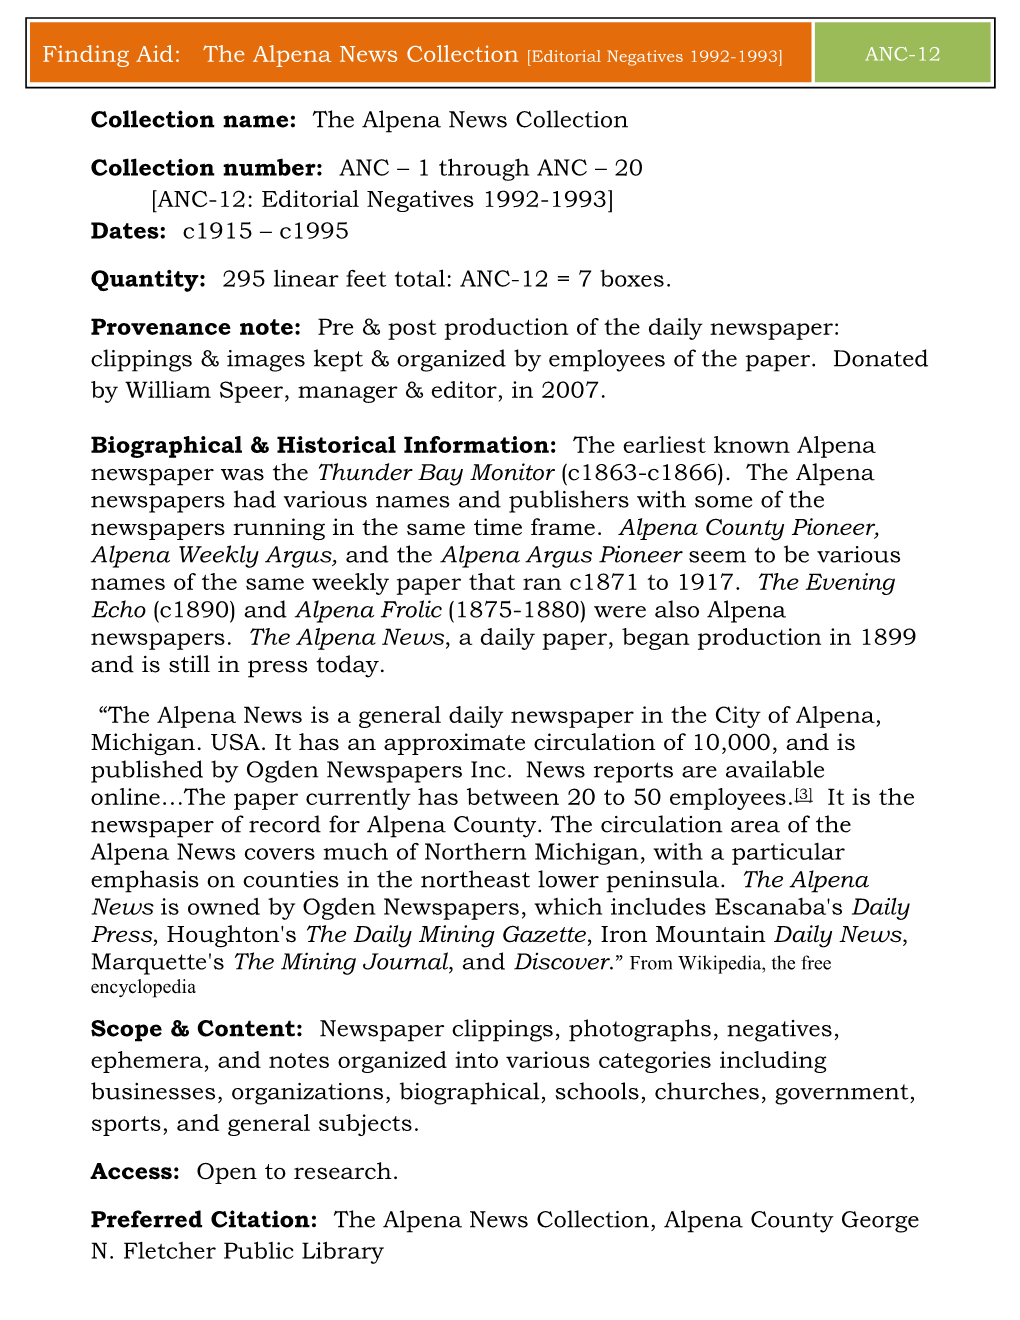 Alpena News Collection: Editorial Negatives (1992-1993) [ANC-12]